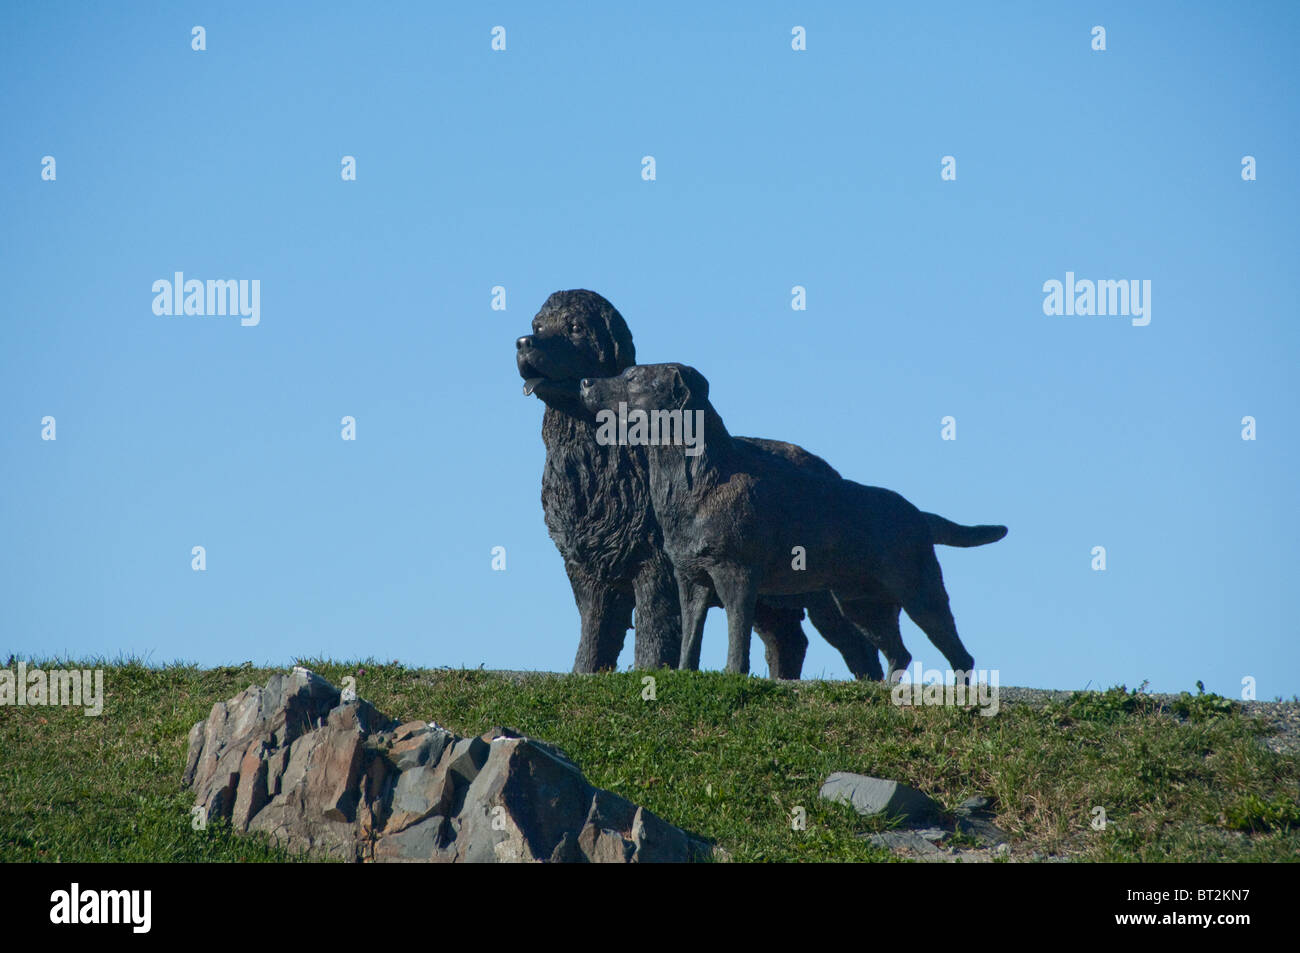 Canada, Newfoundland and Labrador, St. John's. Statues of Newfoundland & Labrador dogs, famous dog breeds native to the area. Stock Photo